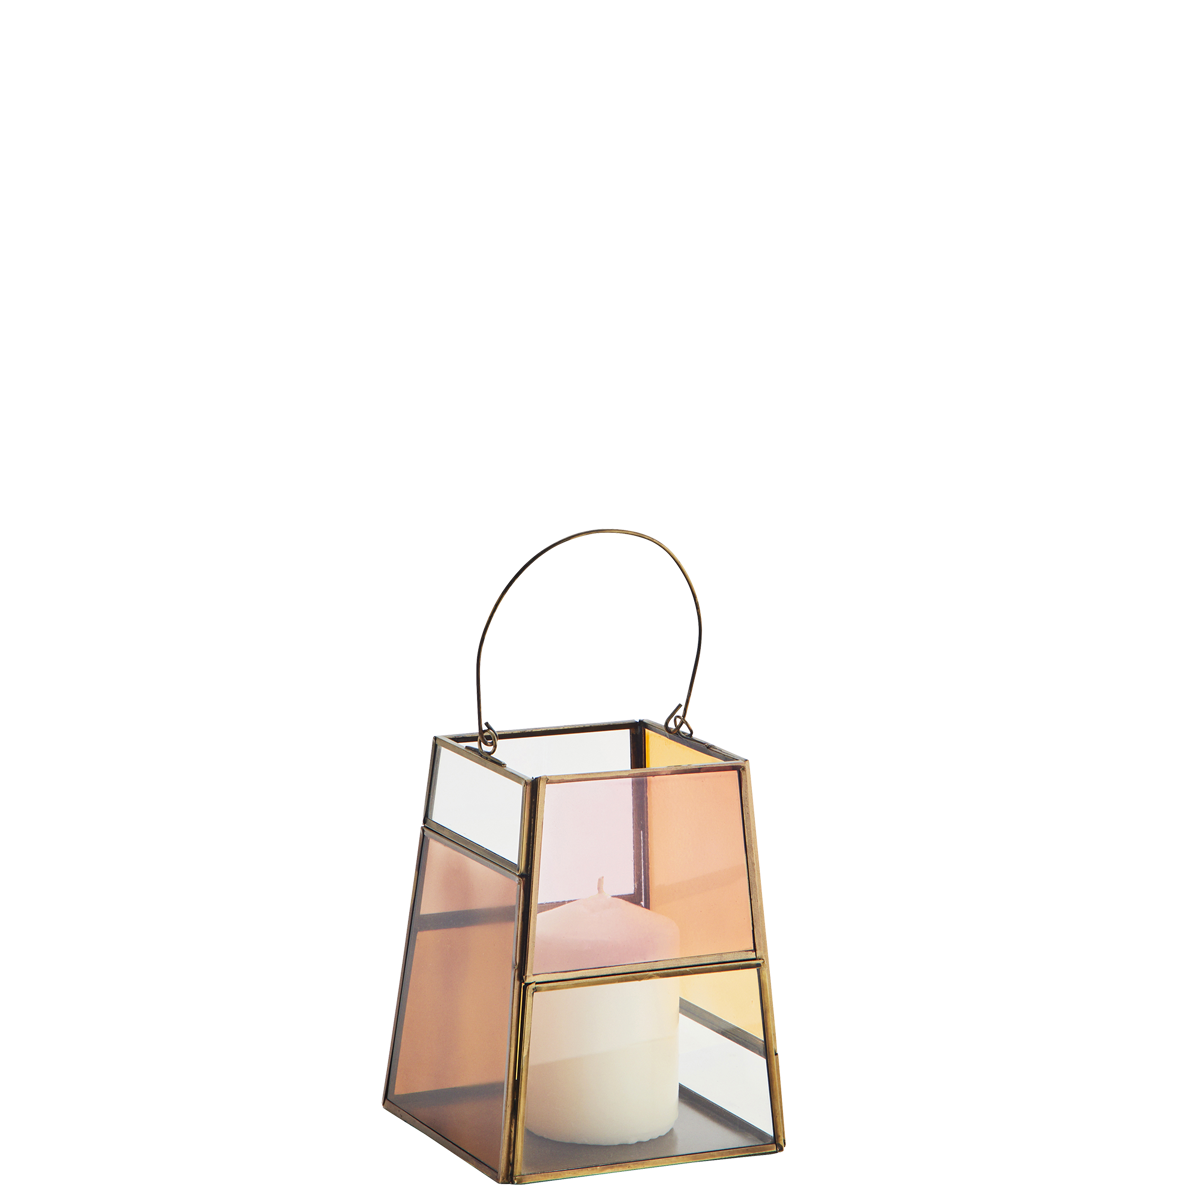 Glass lantern